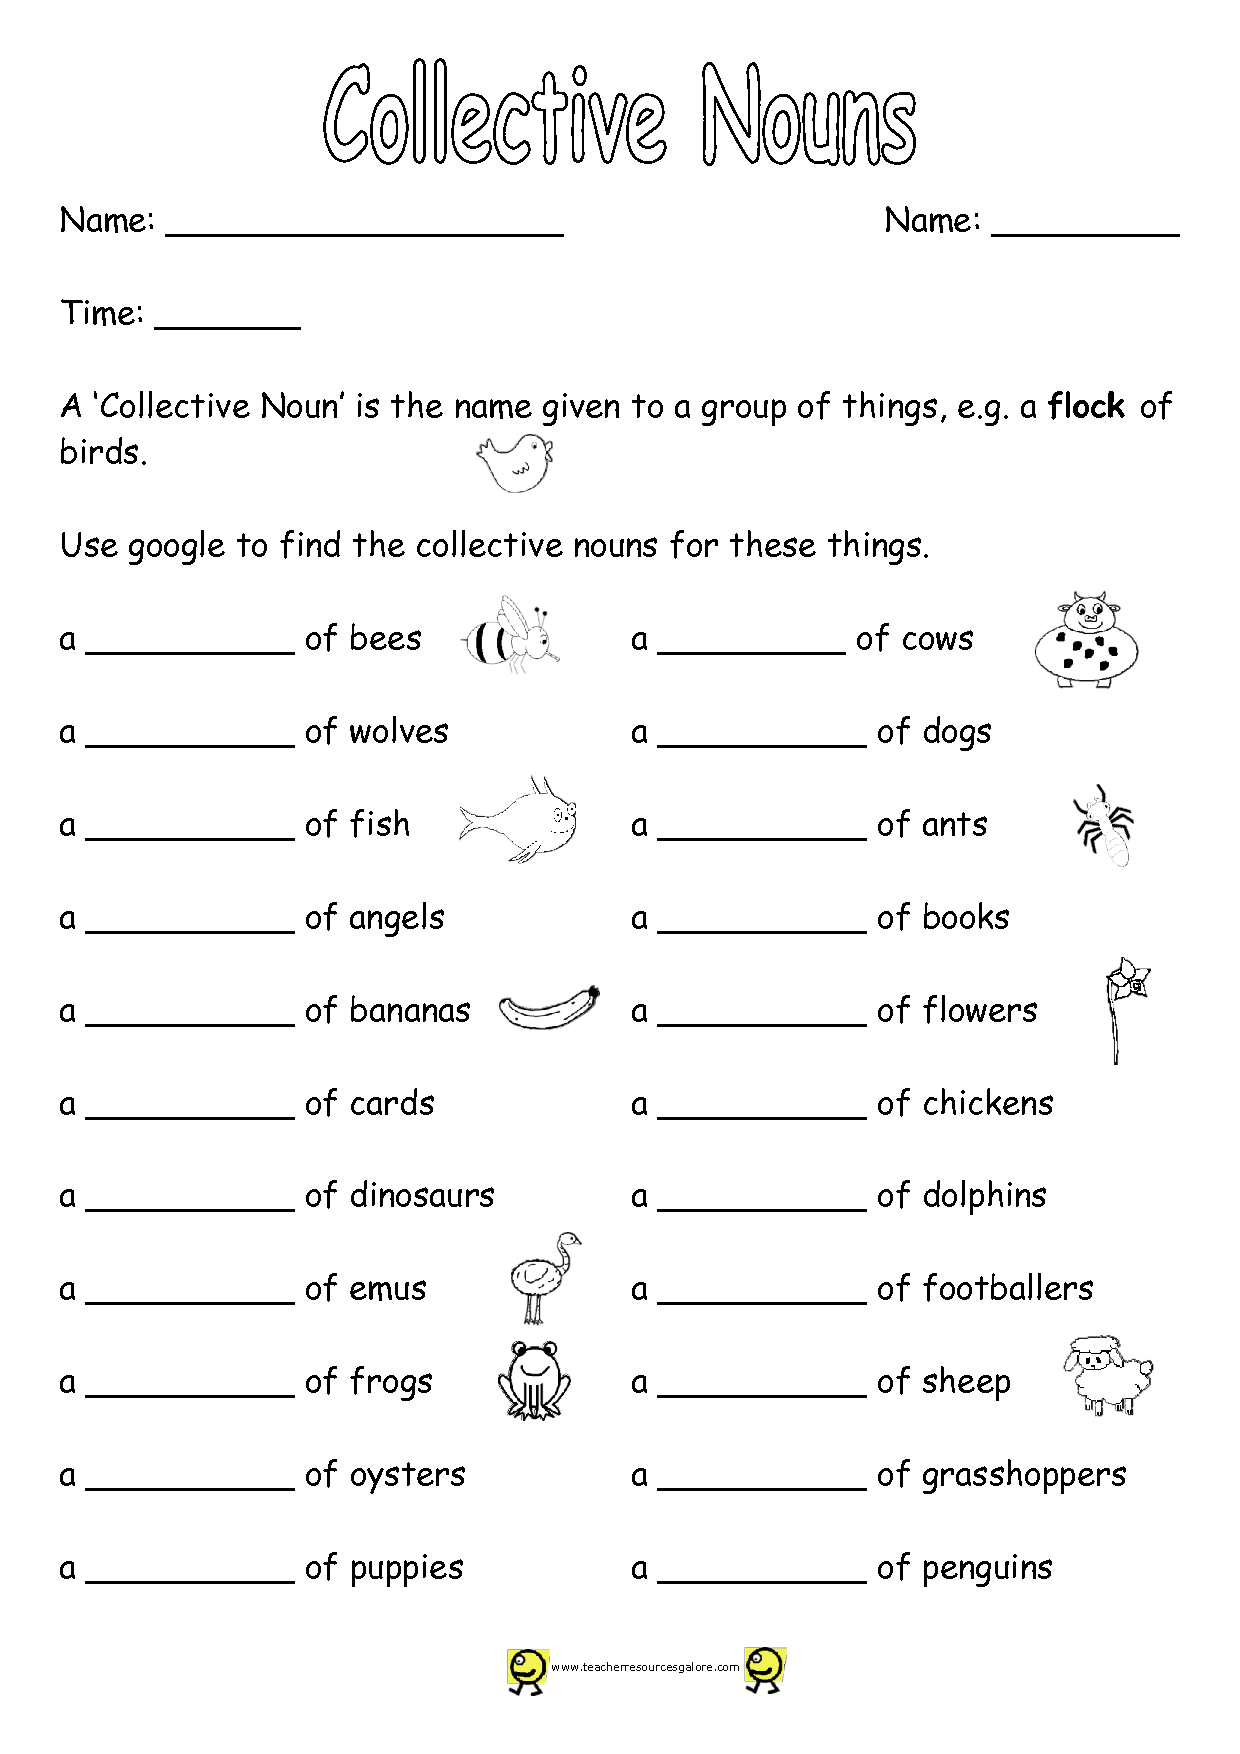 15-best-images-of-noun-coloring-worksheets-printable-noun-worksheets